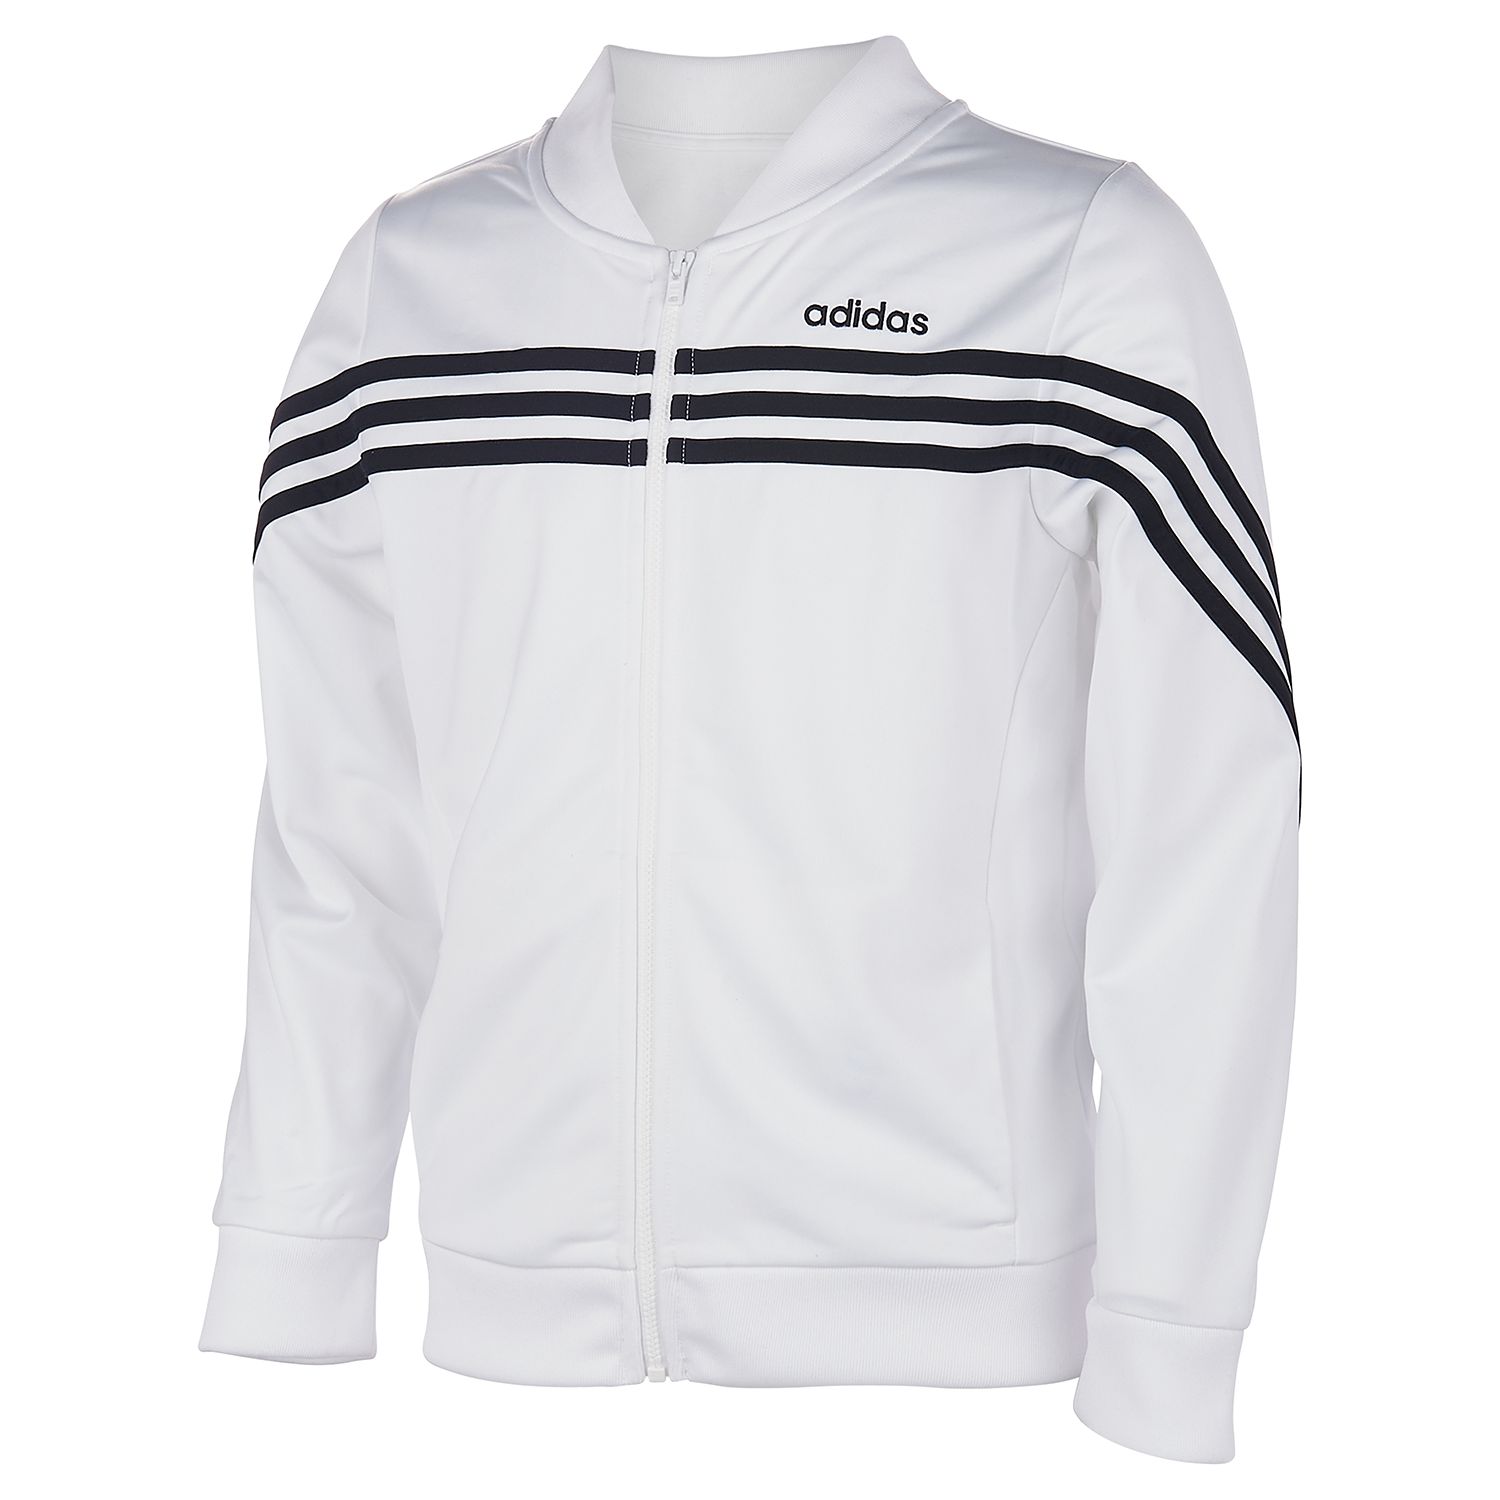 adidas linear tricot jacket